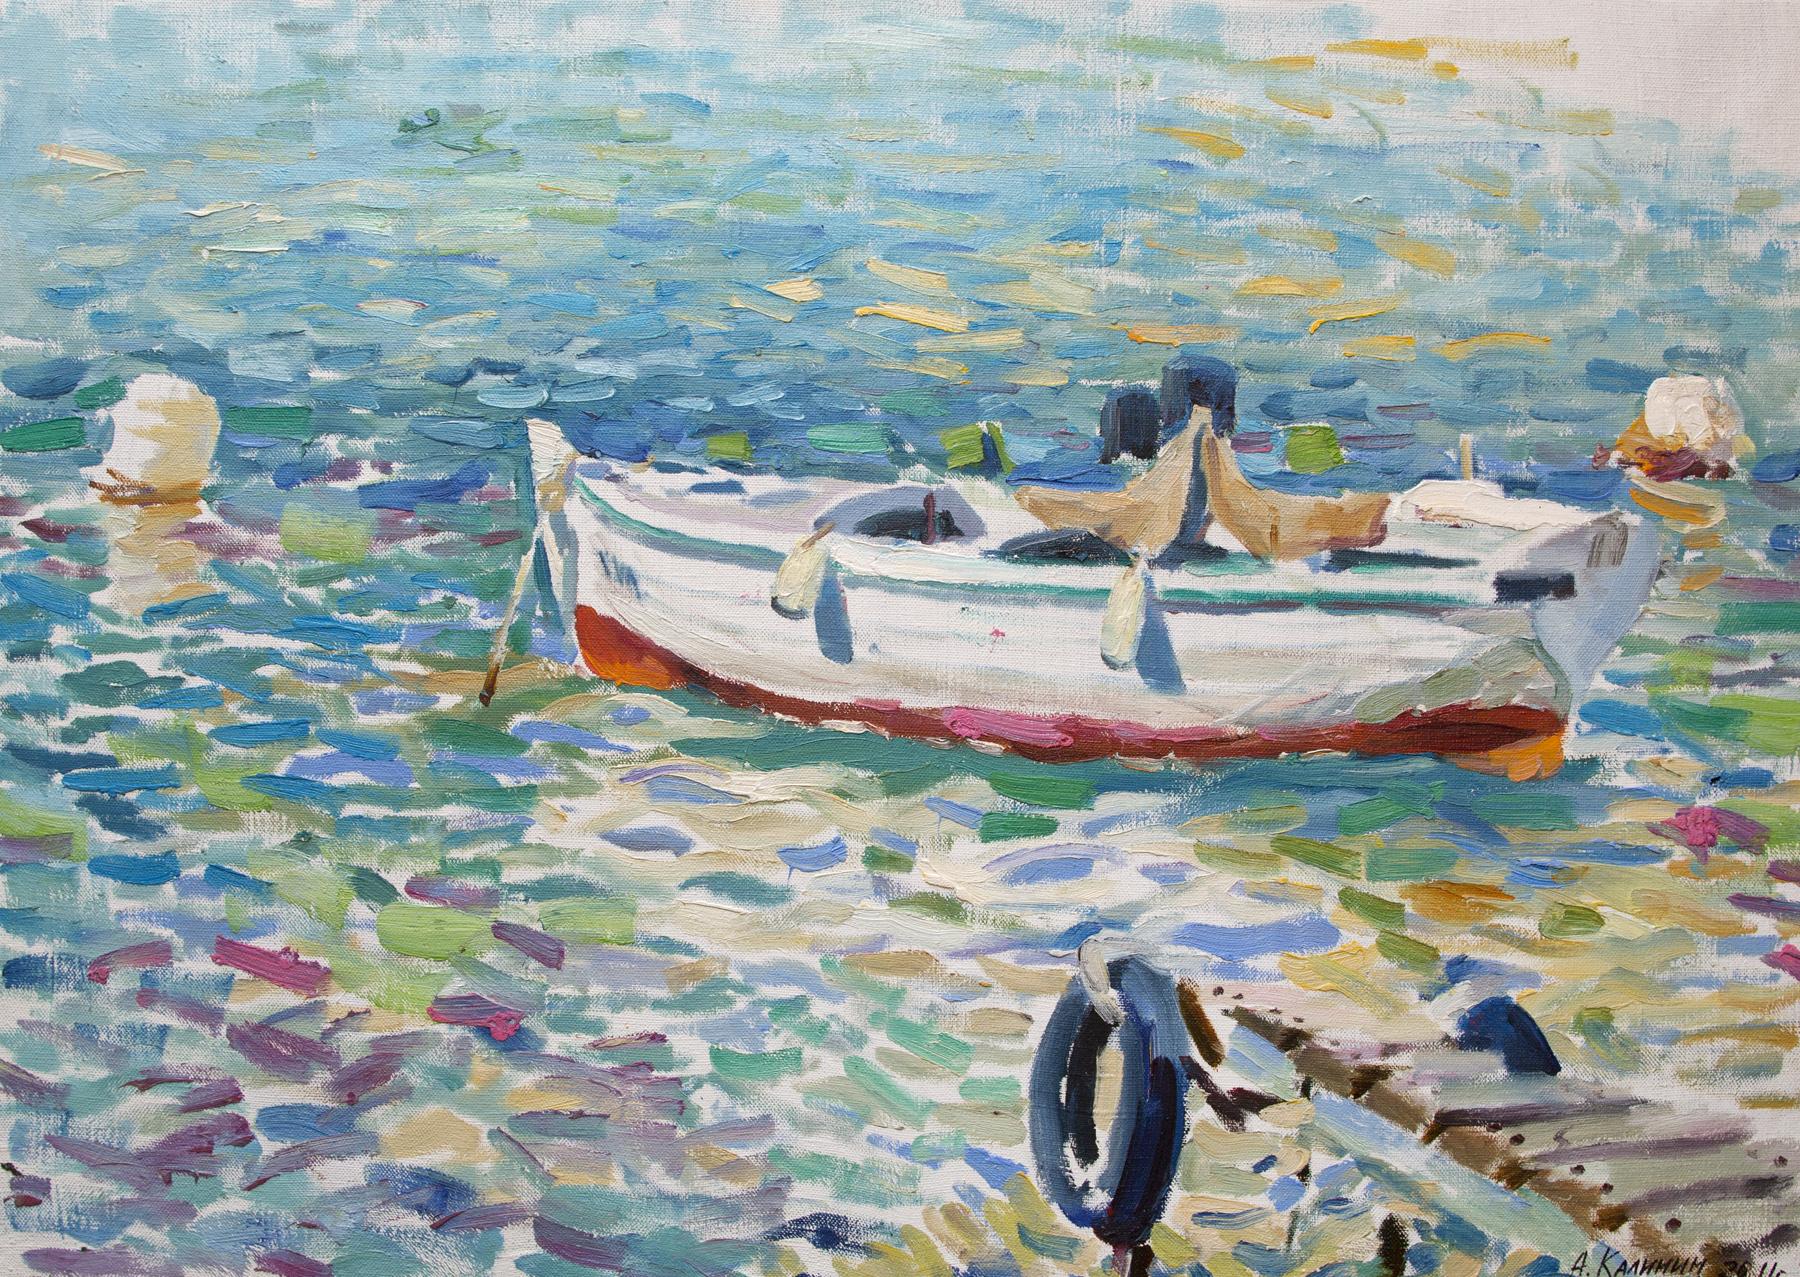 科托尔船湾. Original modern art painting